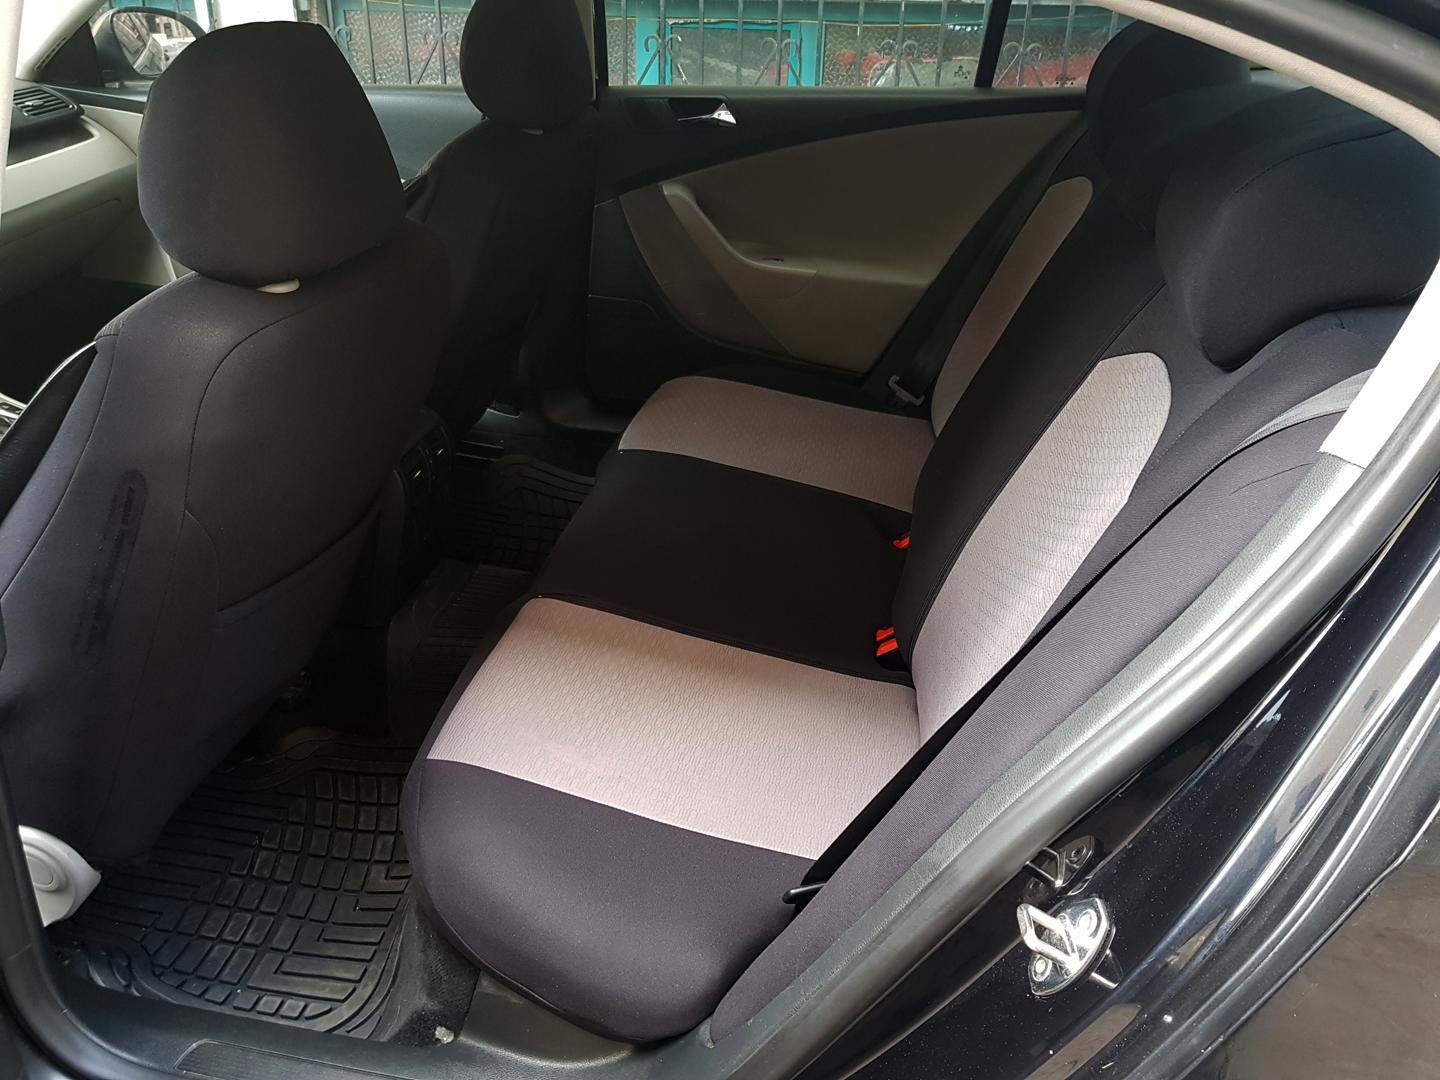 Car Seat Covers Protectors Vw Jetta Iv Black Grey No23 Complete - Car Seat Covers For 2019 Vw Jetta